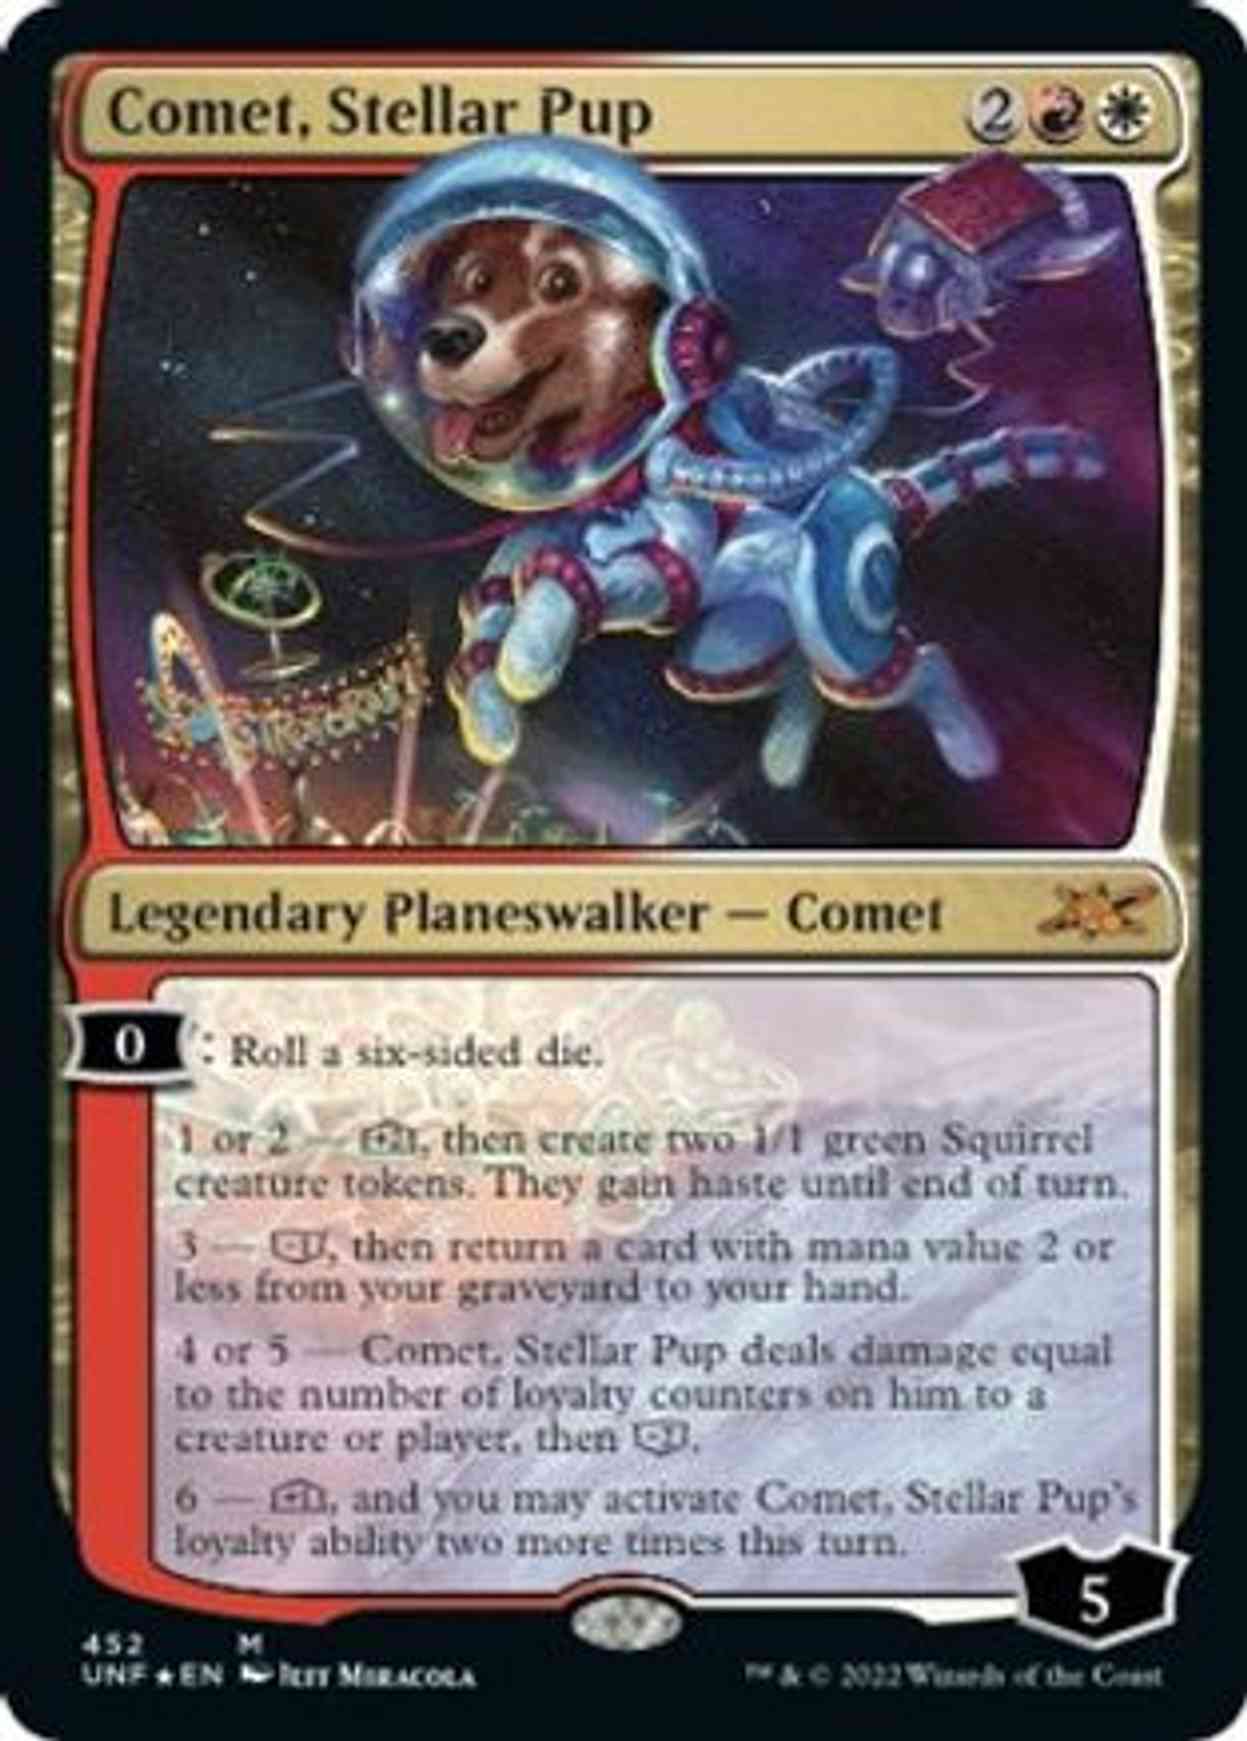 Comet, Stellar Pup (Galaxy Foil) magic card front